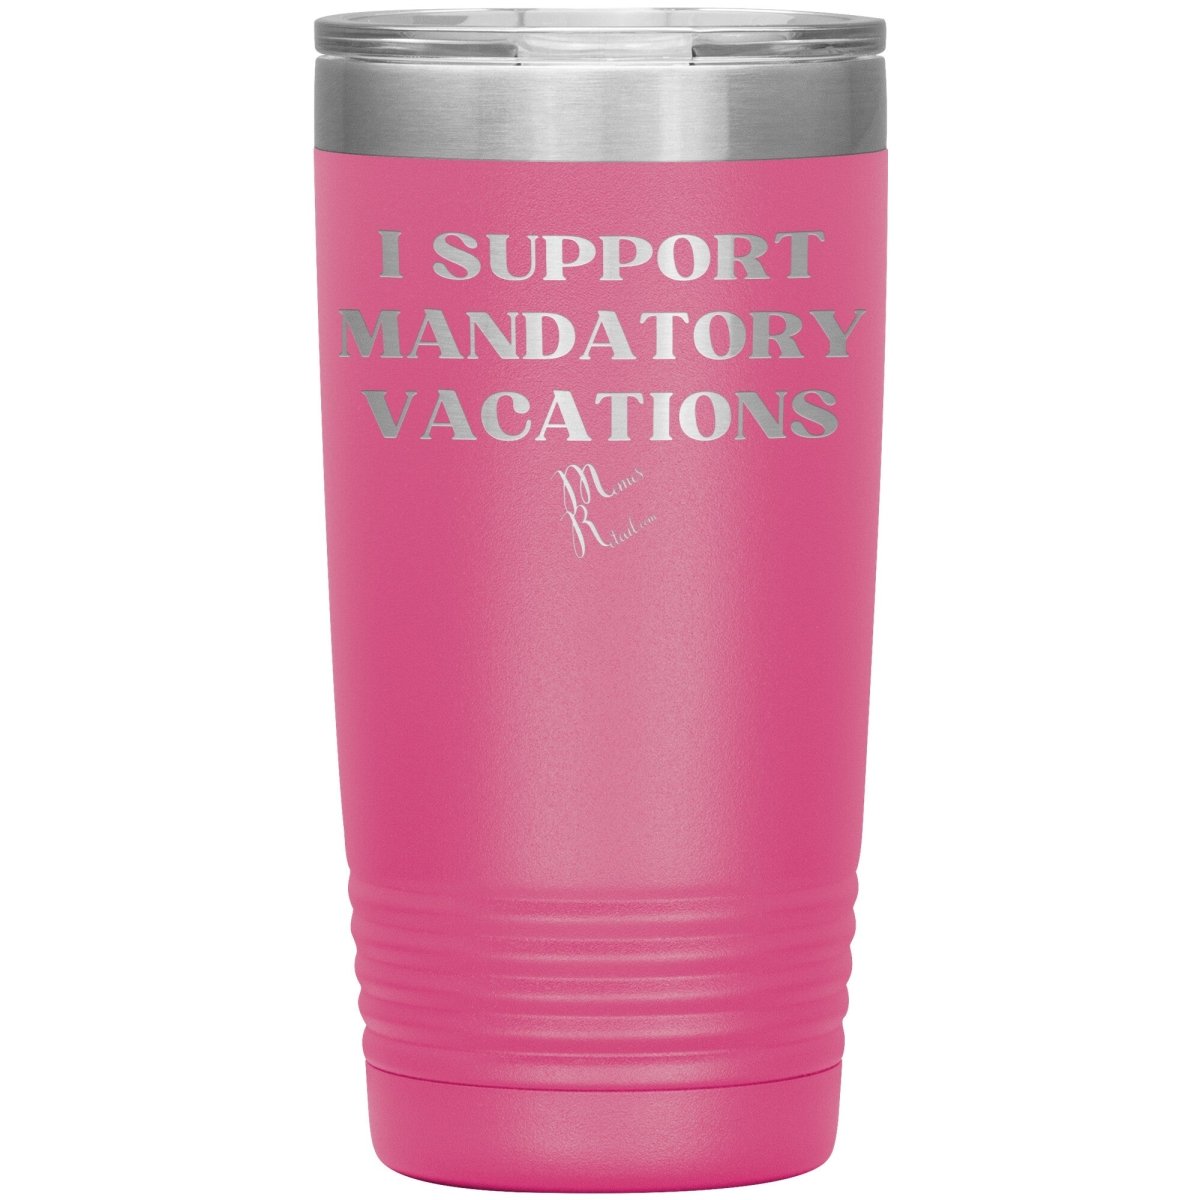 I support mandatory vacations Tumblers, 20oz Insulated Tumbler / Pink - MemesRetail.com